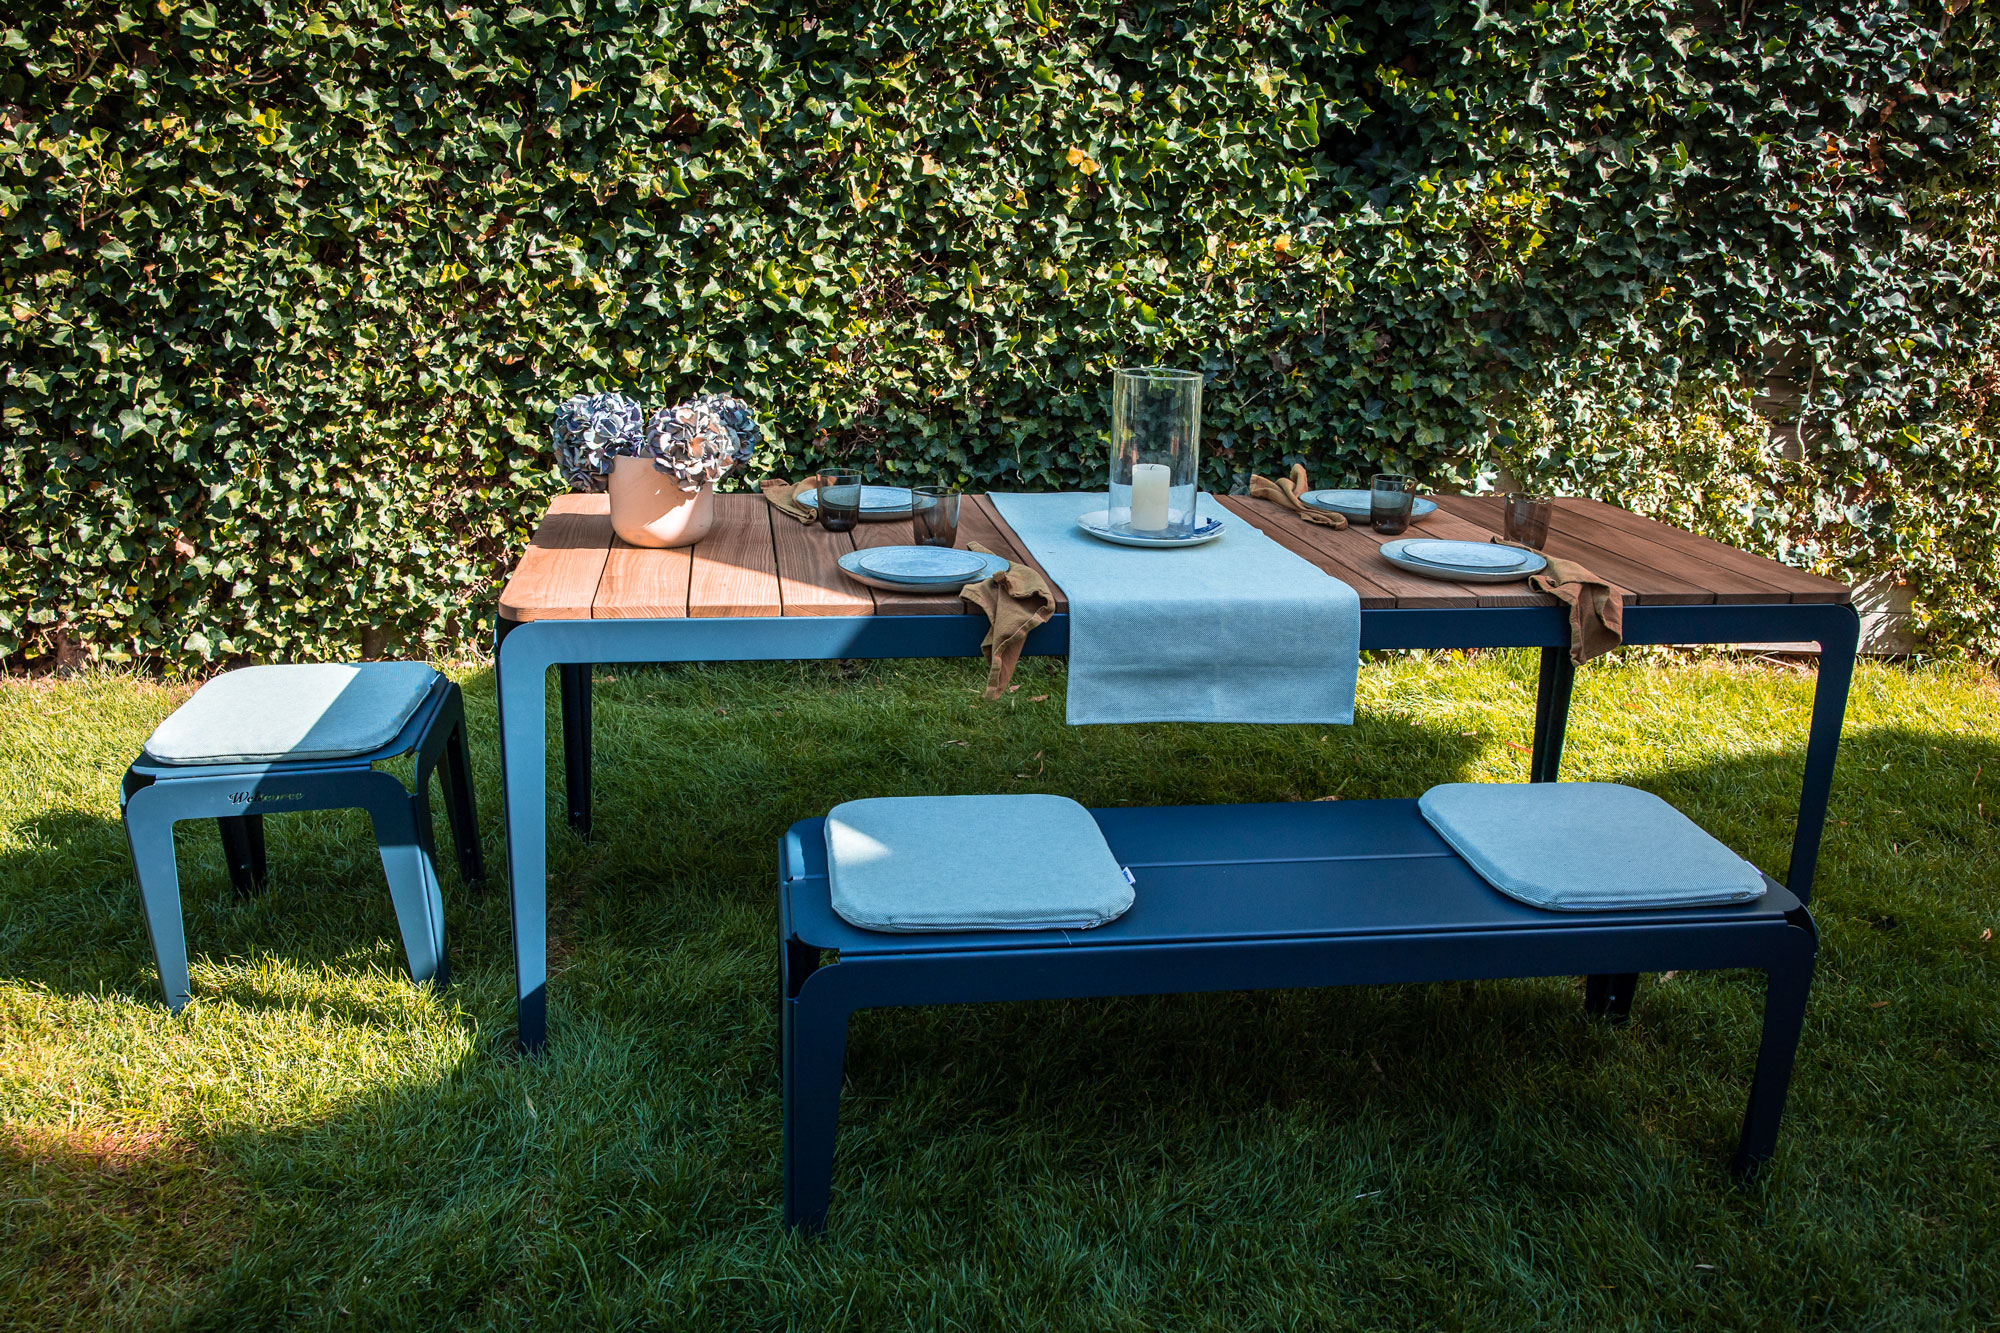 Weltevree-bended-table-wood-dining-outside-blue